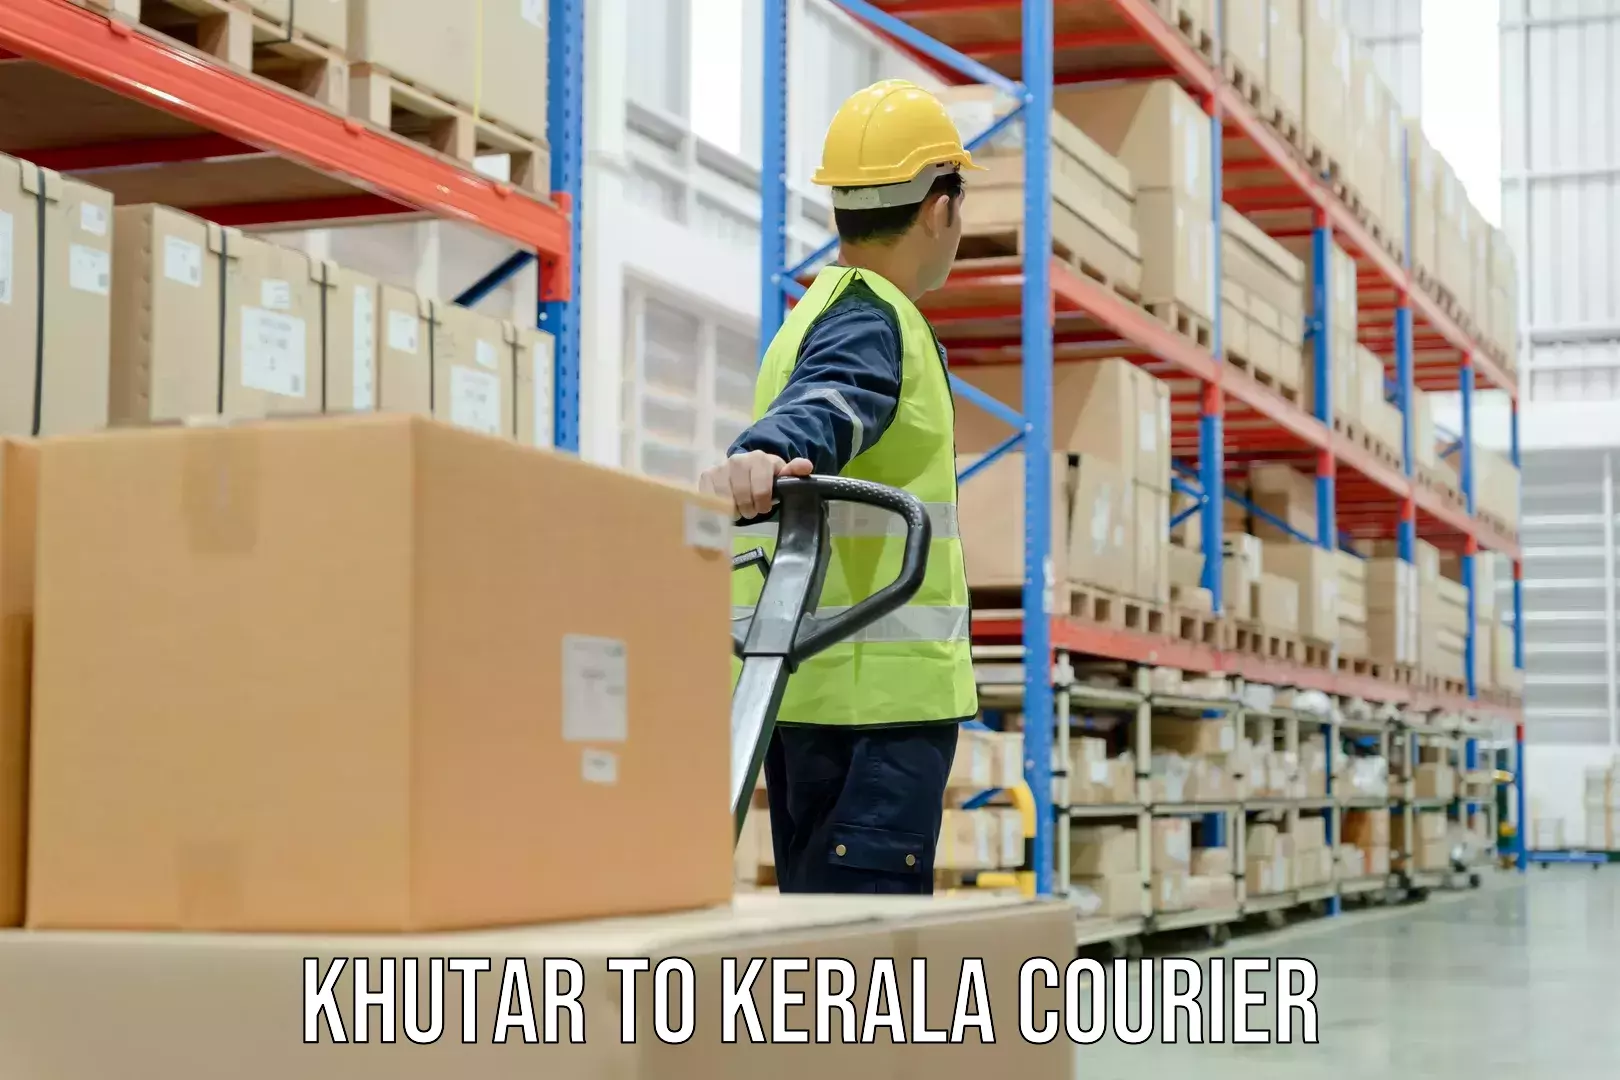 Courier service partnerships Khutar to Kerala